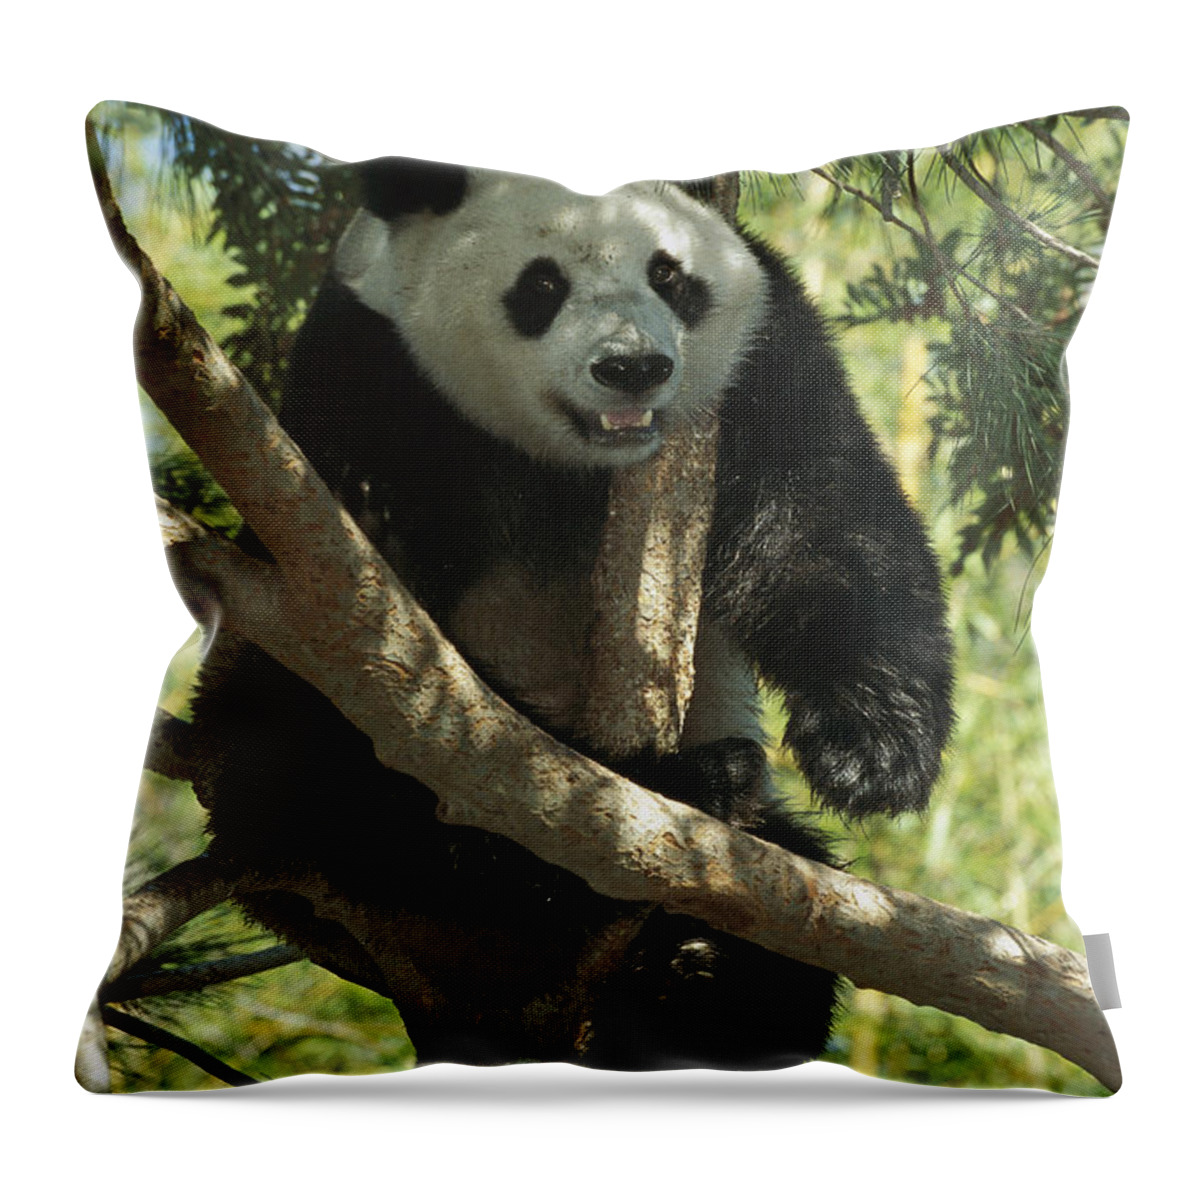 Mp Throw Pillow featuring the photograph Giant Panda Ailuropoda Melanoleuca by San Diego Zoo